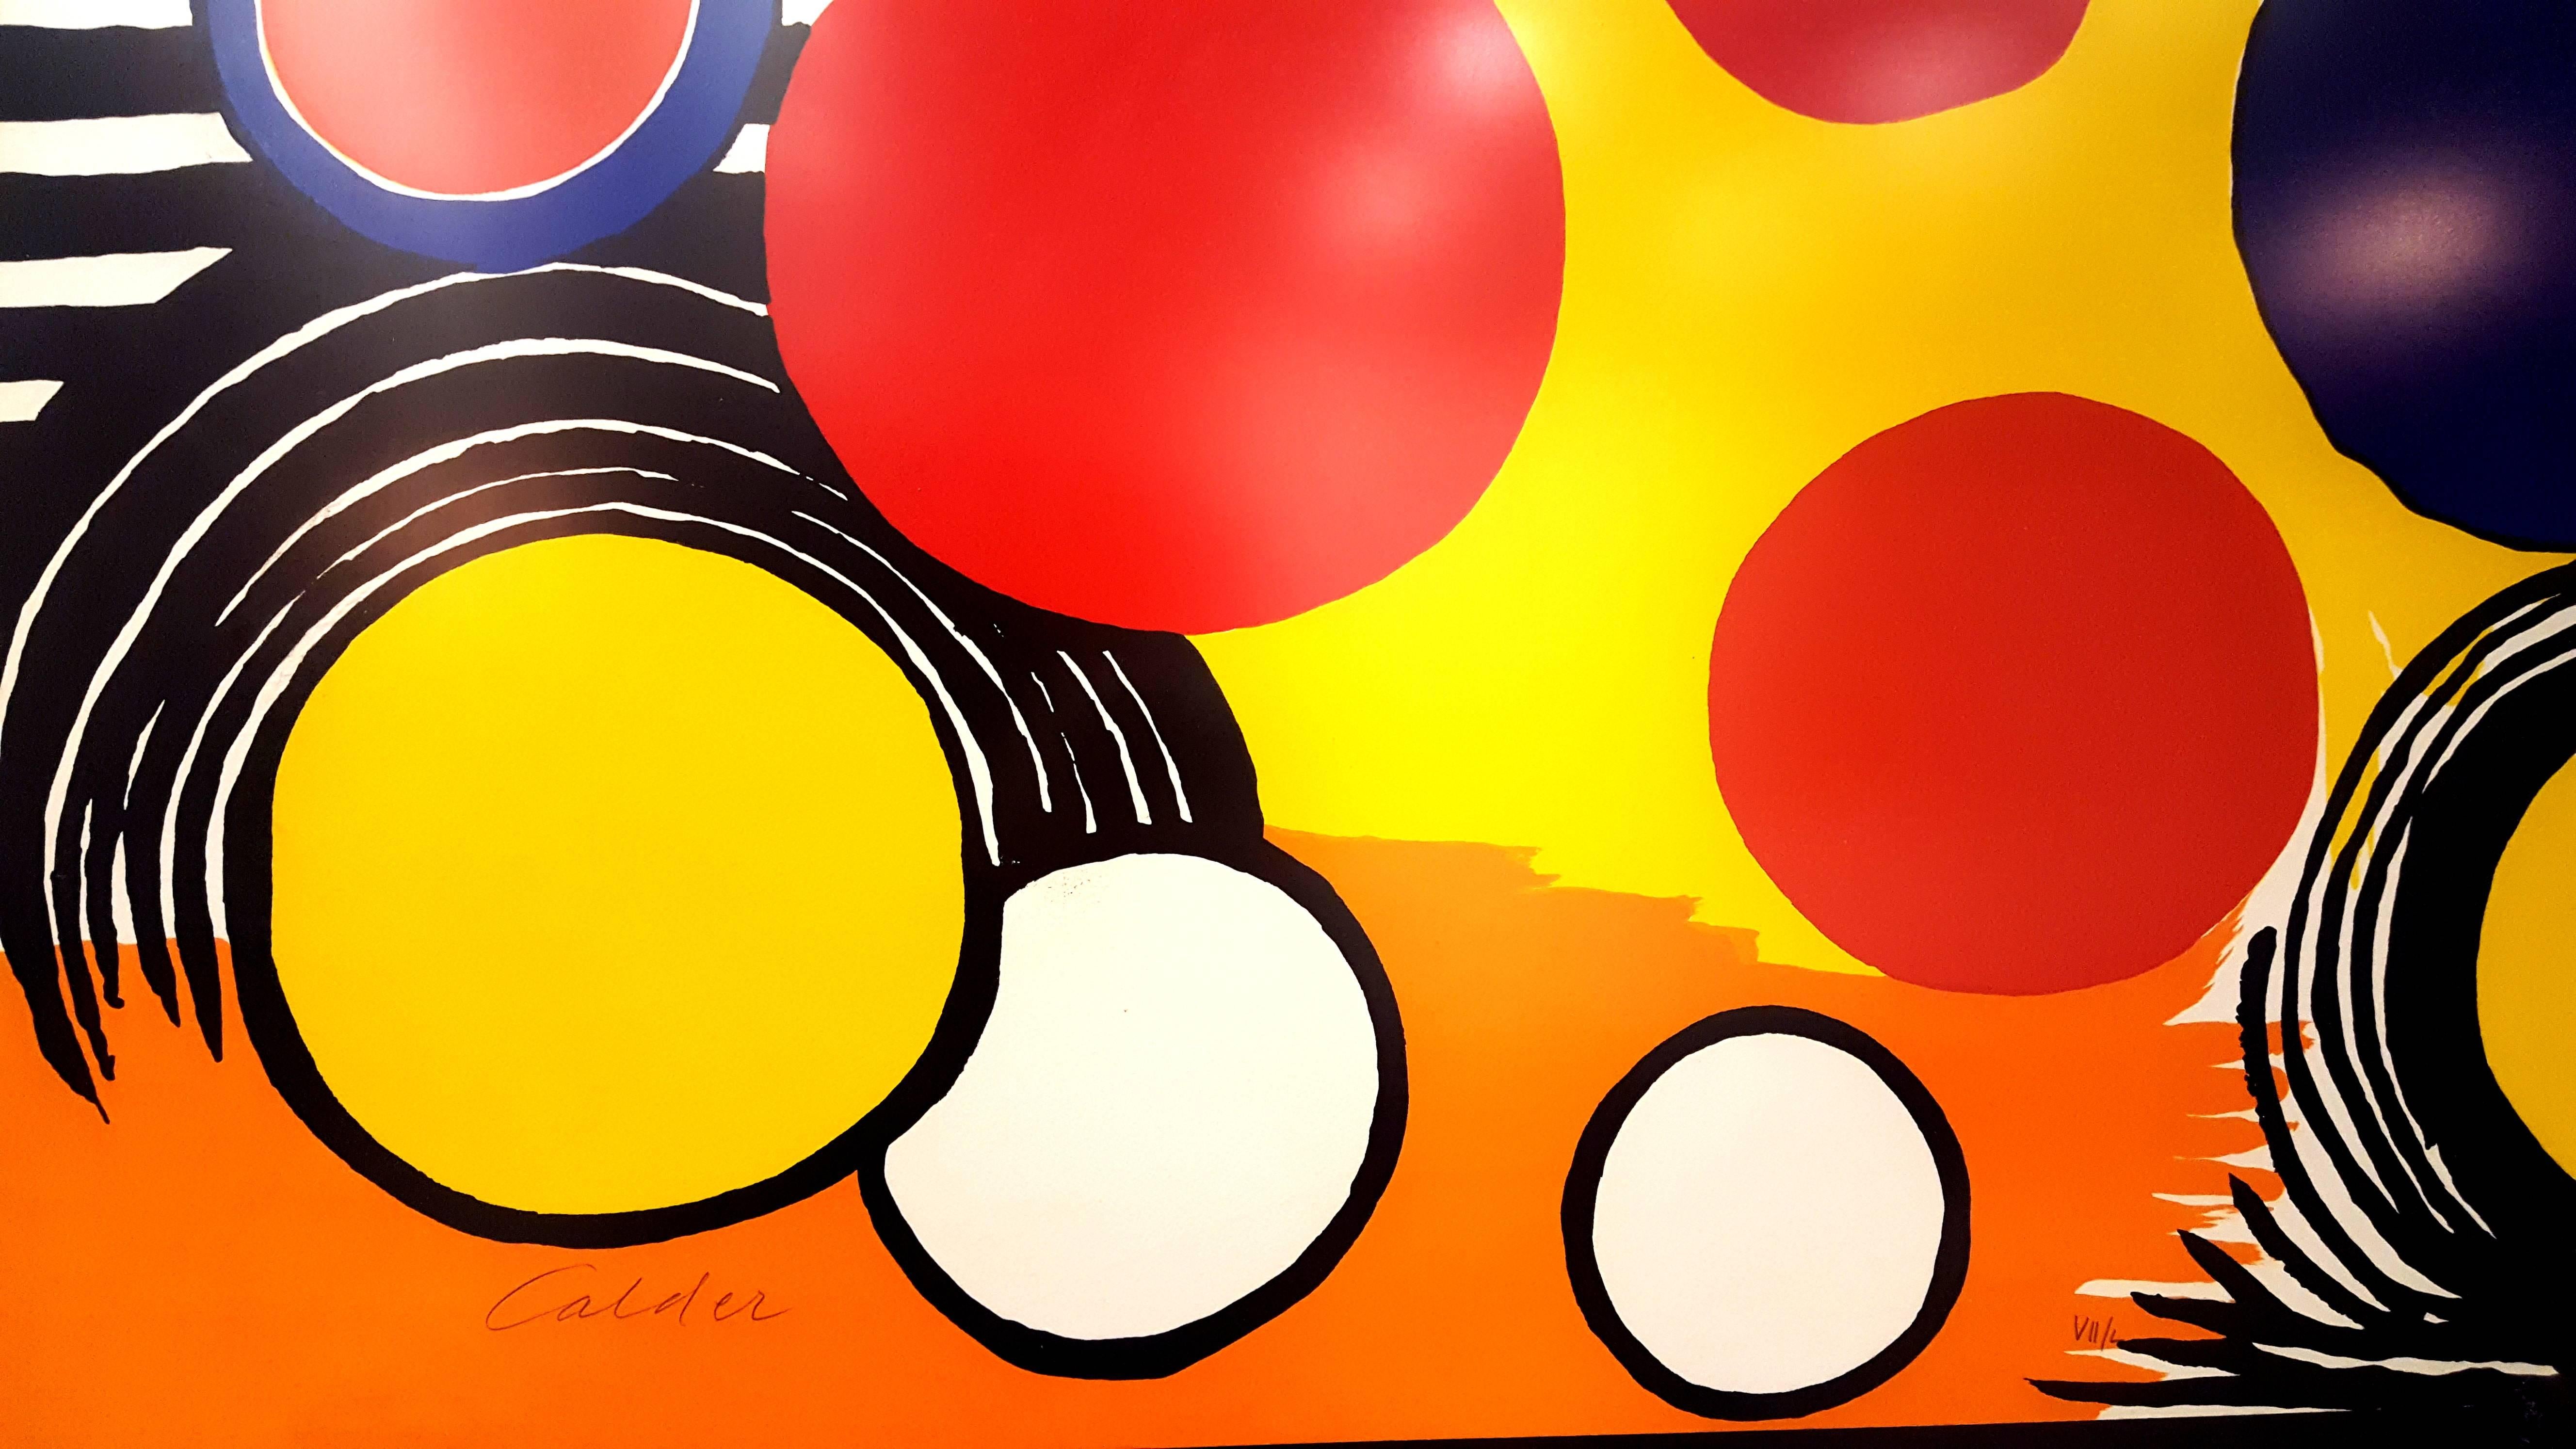 Alexander Calder - Circles - Original HandSigned Lithograph 5